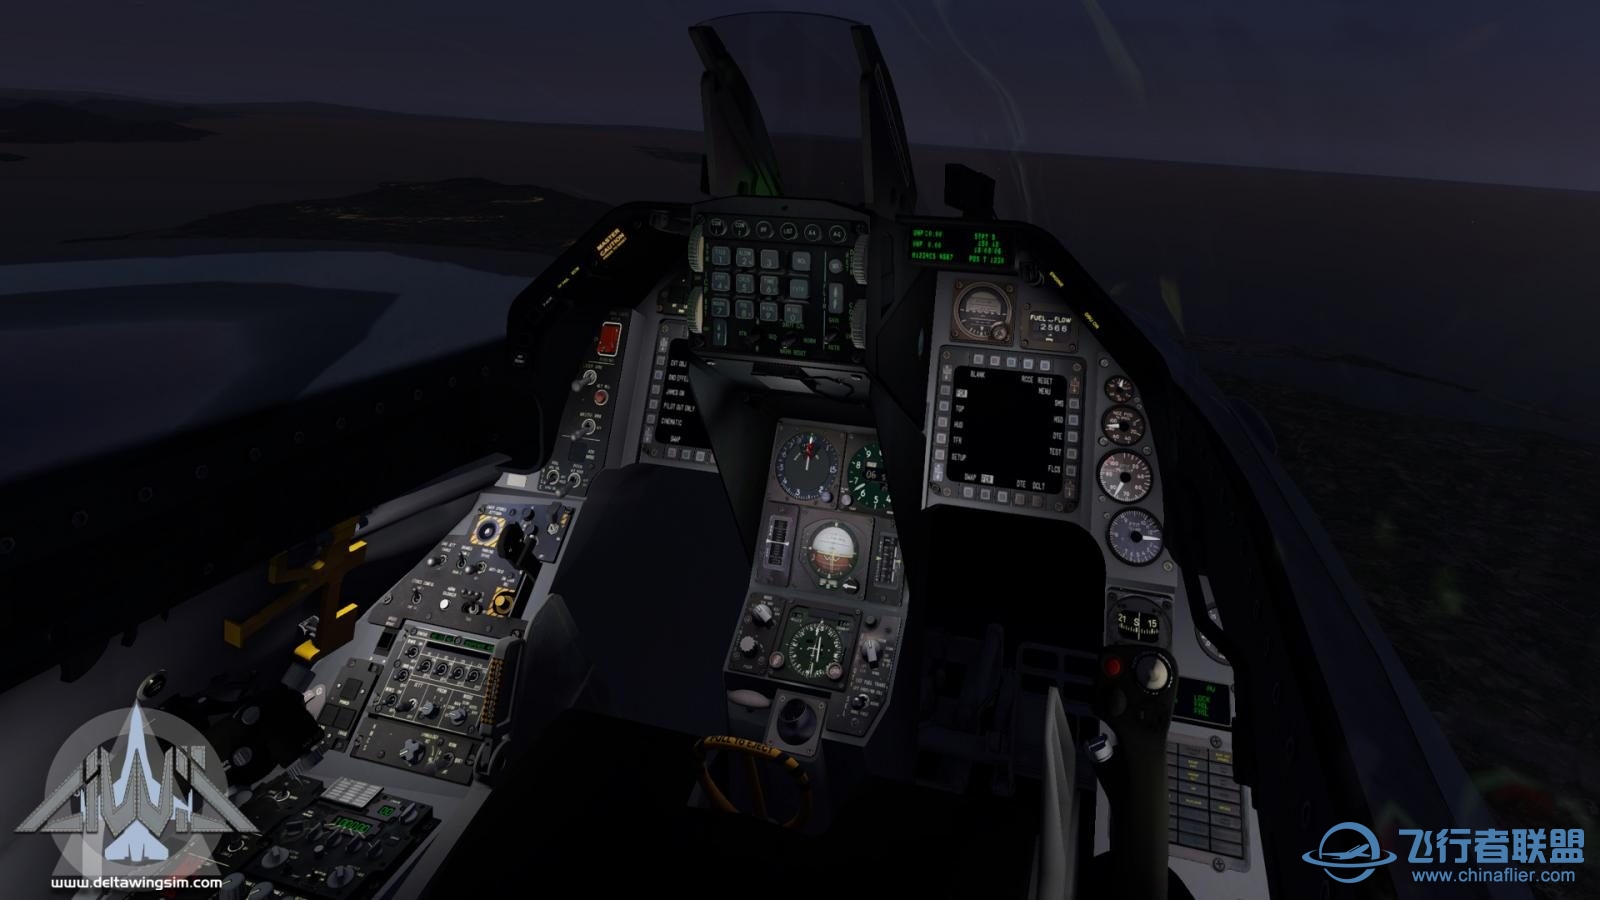 DeltaWing Simulations 发布 F-16C XPL-439 